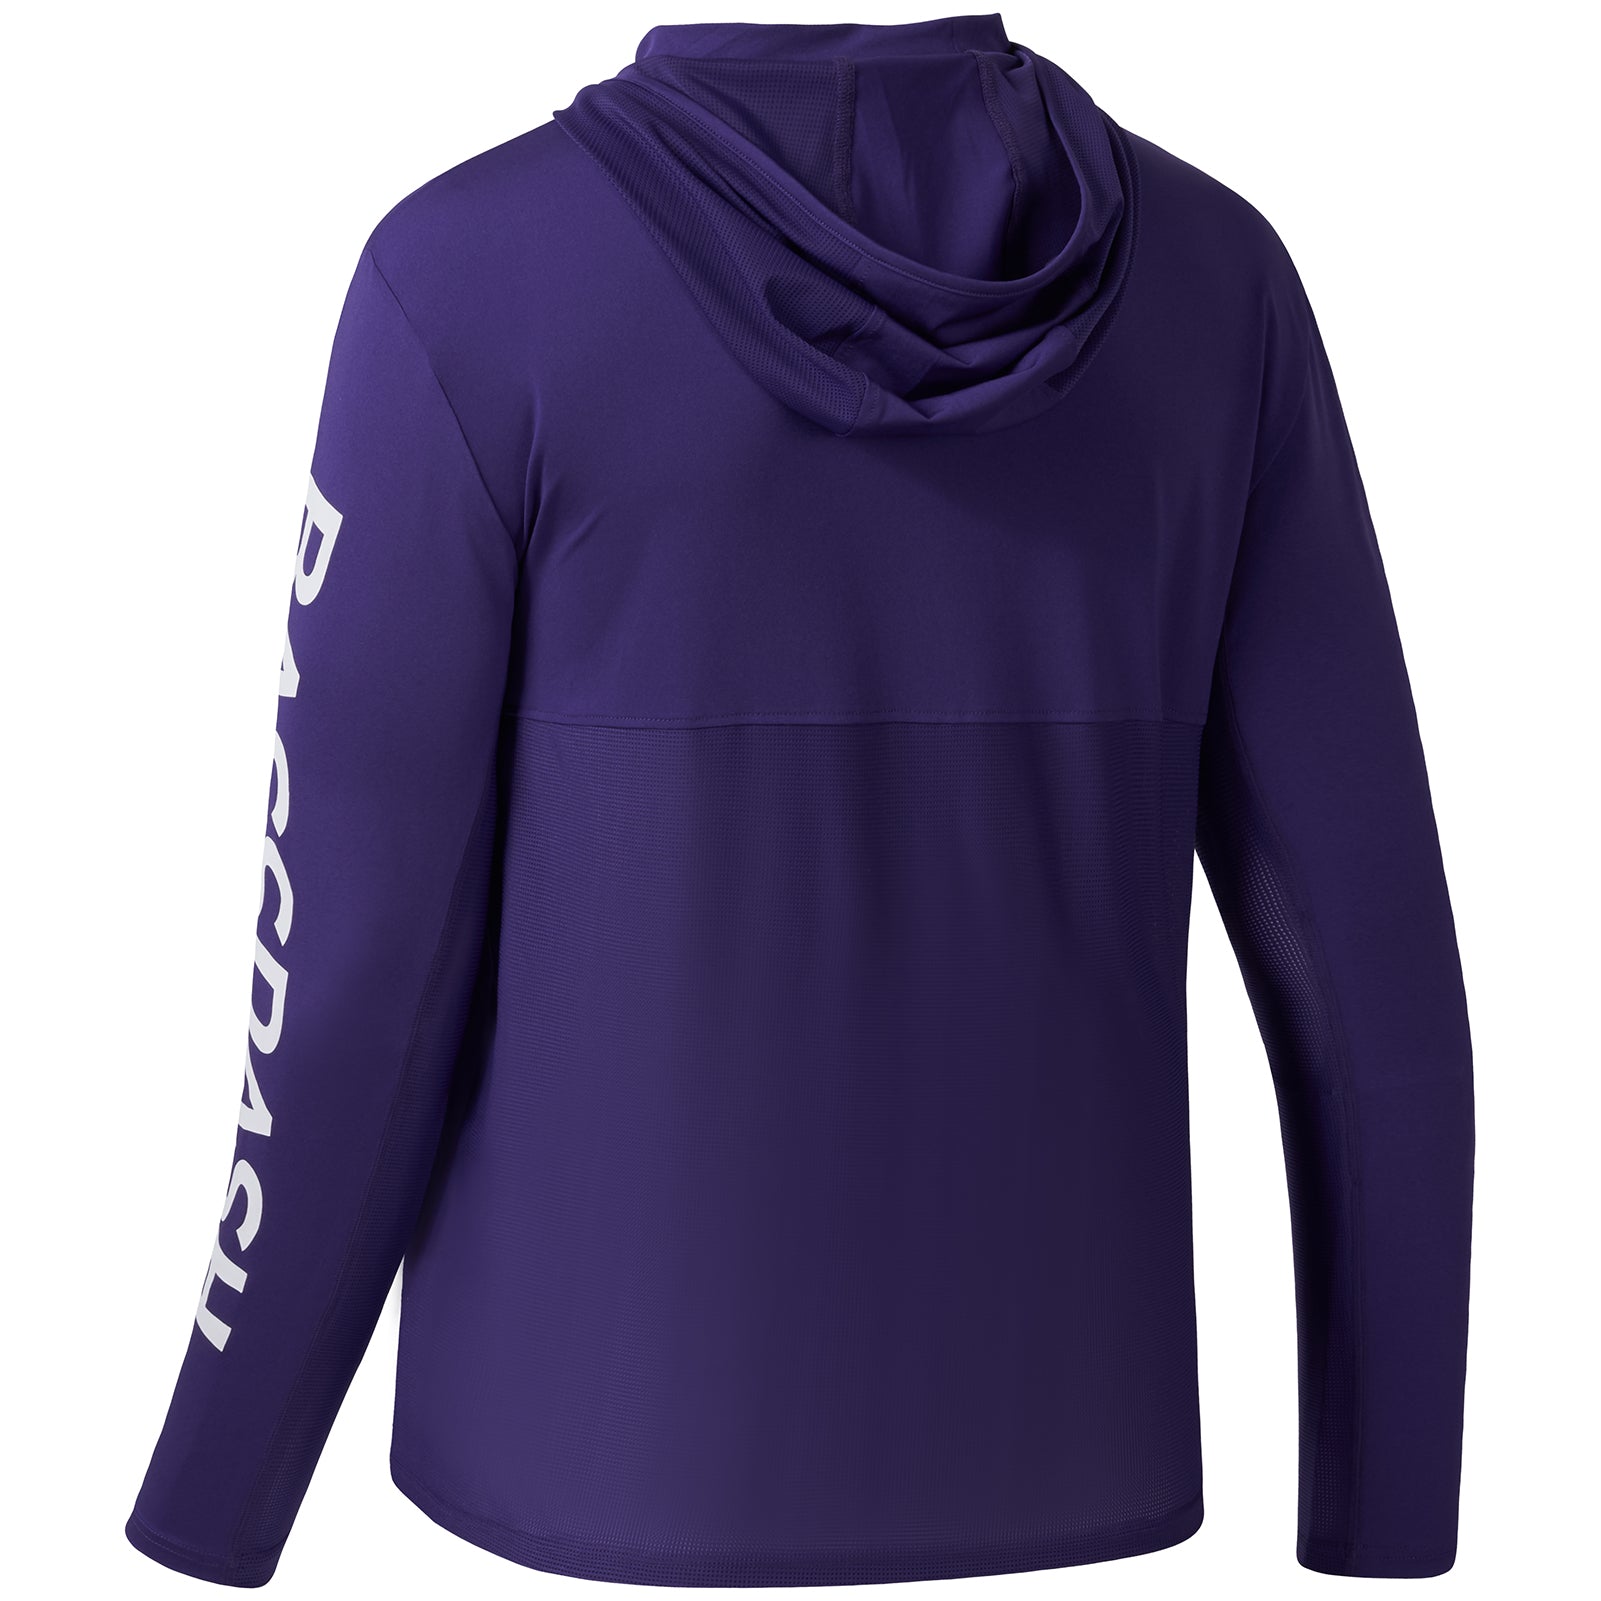 Bassdash UPF 50+ Fishing Hooded Shirt For Men Sun Protection Long Sleeve Performance Hiking Climbing Shirt, Purple/White Logo / XL